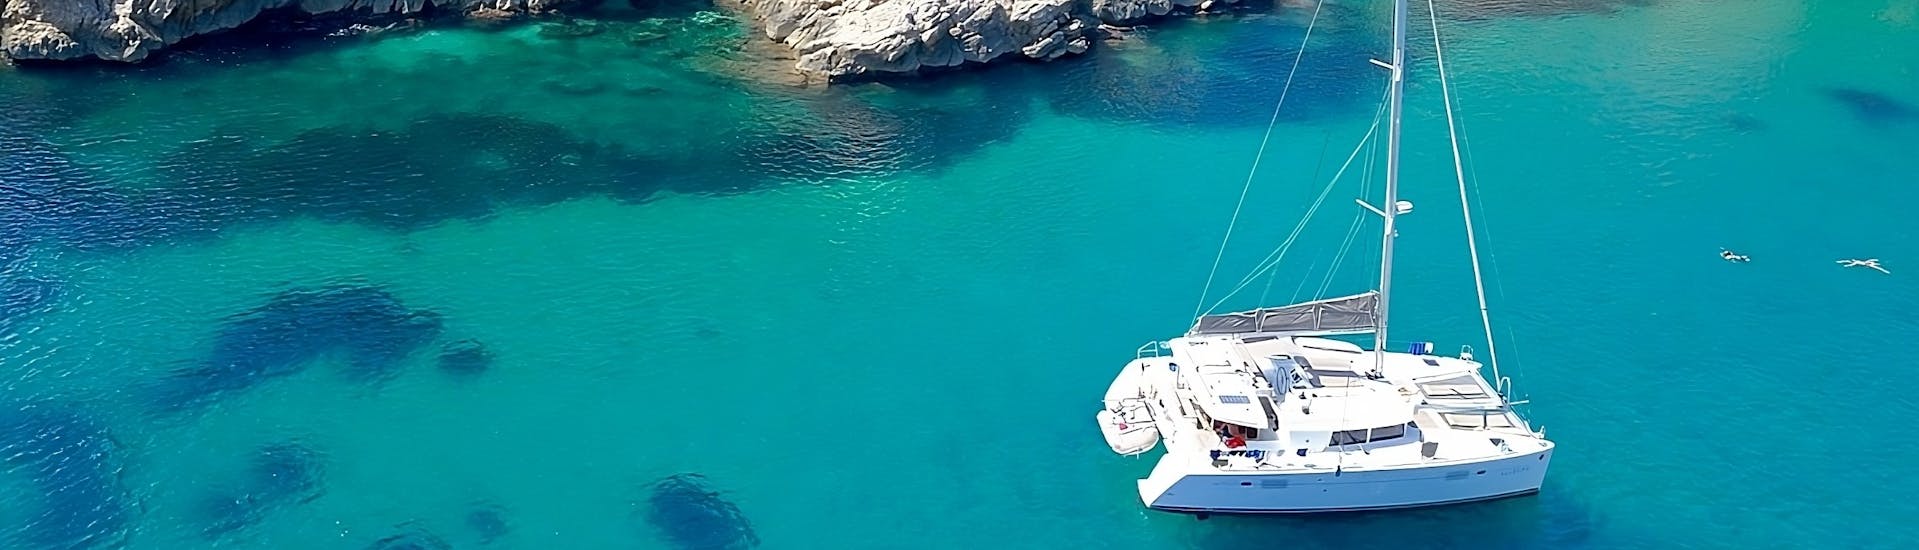 Some people enjoying a bachelor Private Boat Trip from San Antonio to Cala Comte with Goa Catamaran Ibiza.